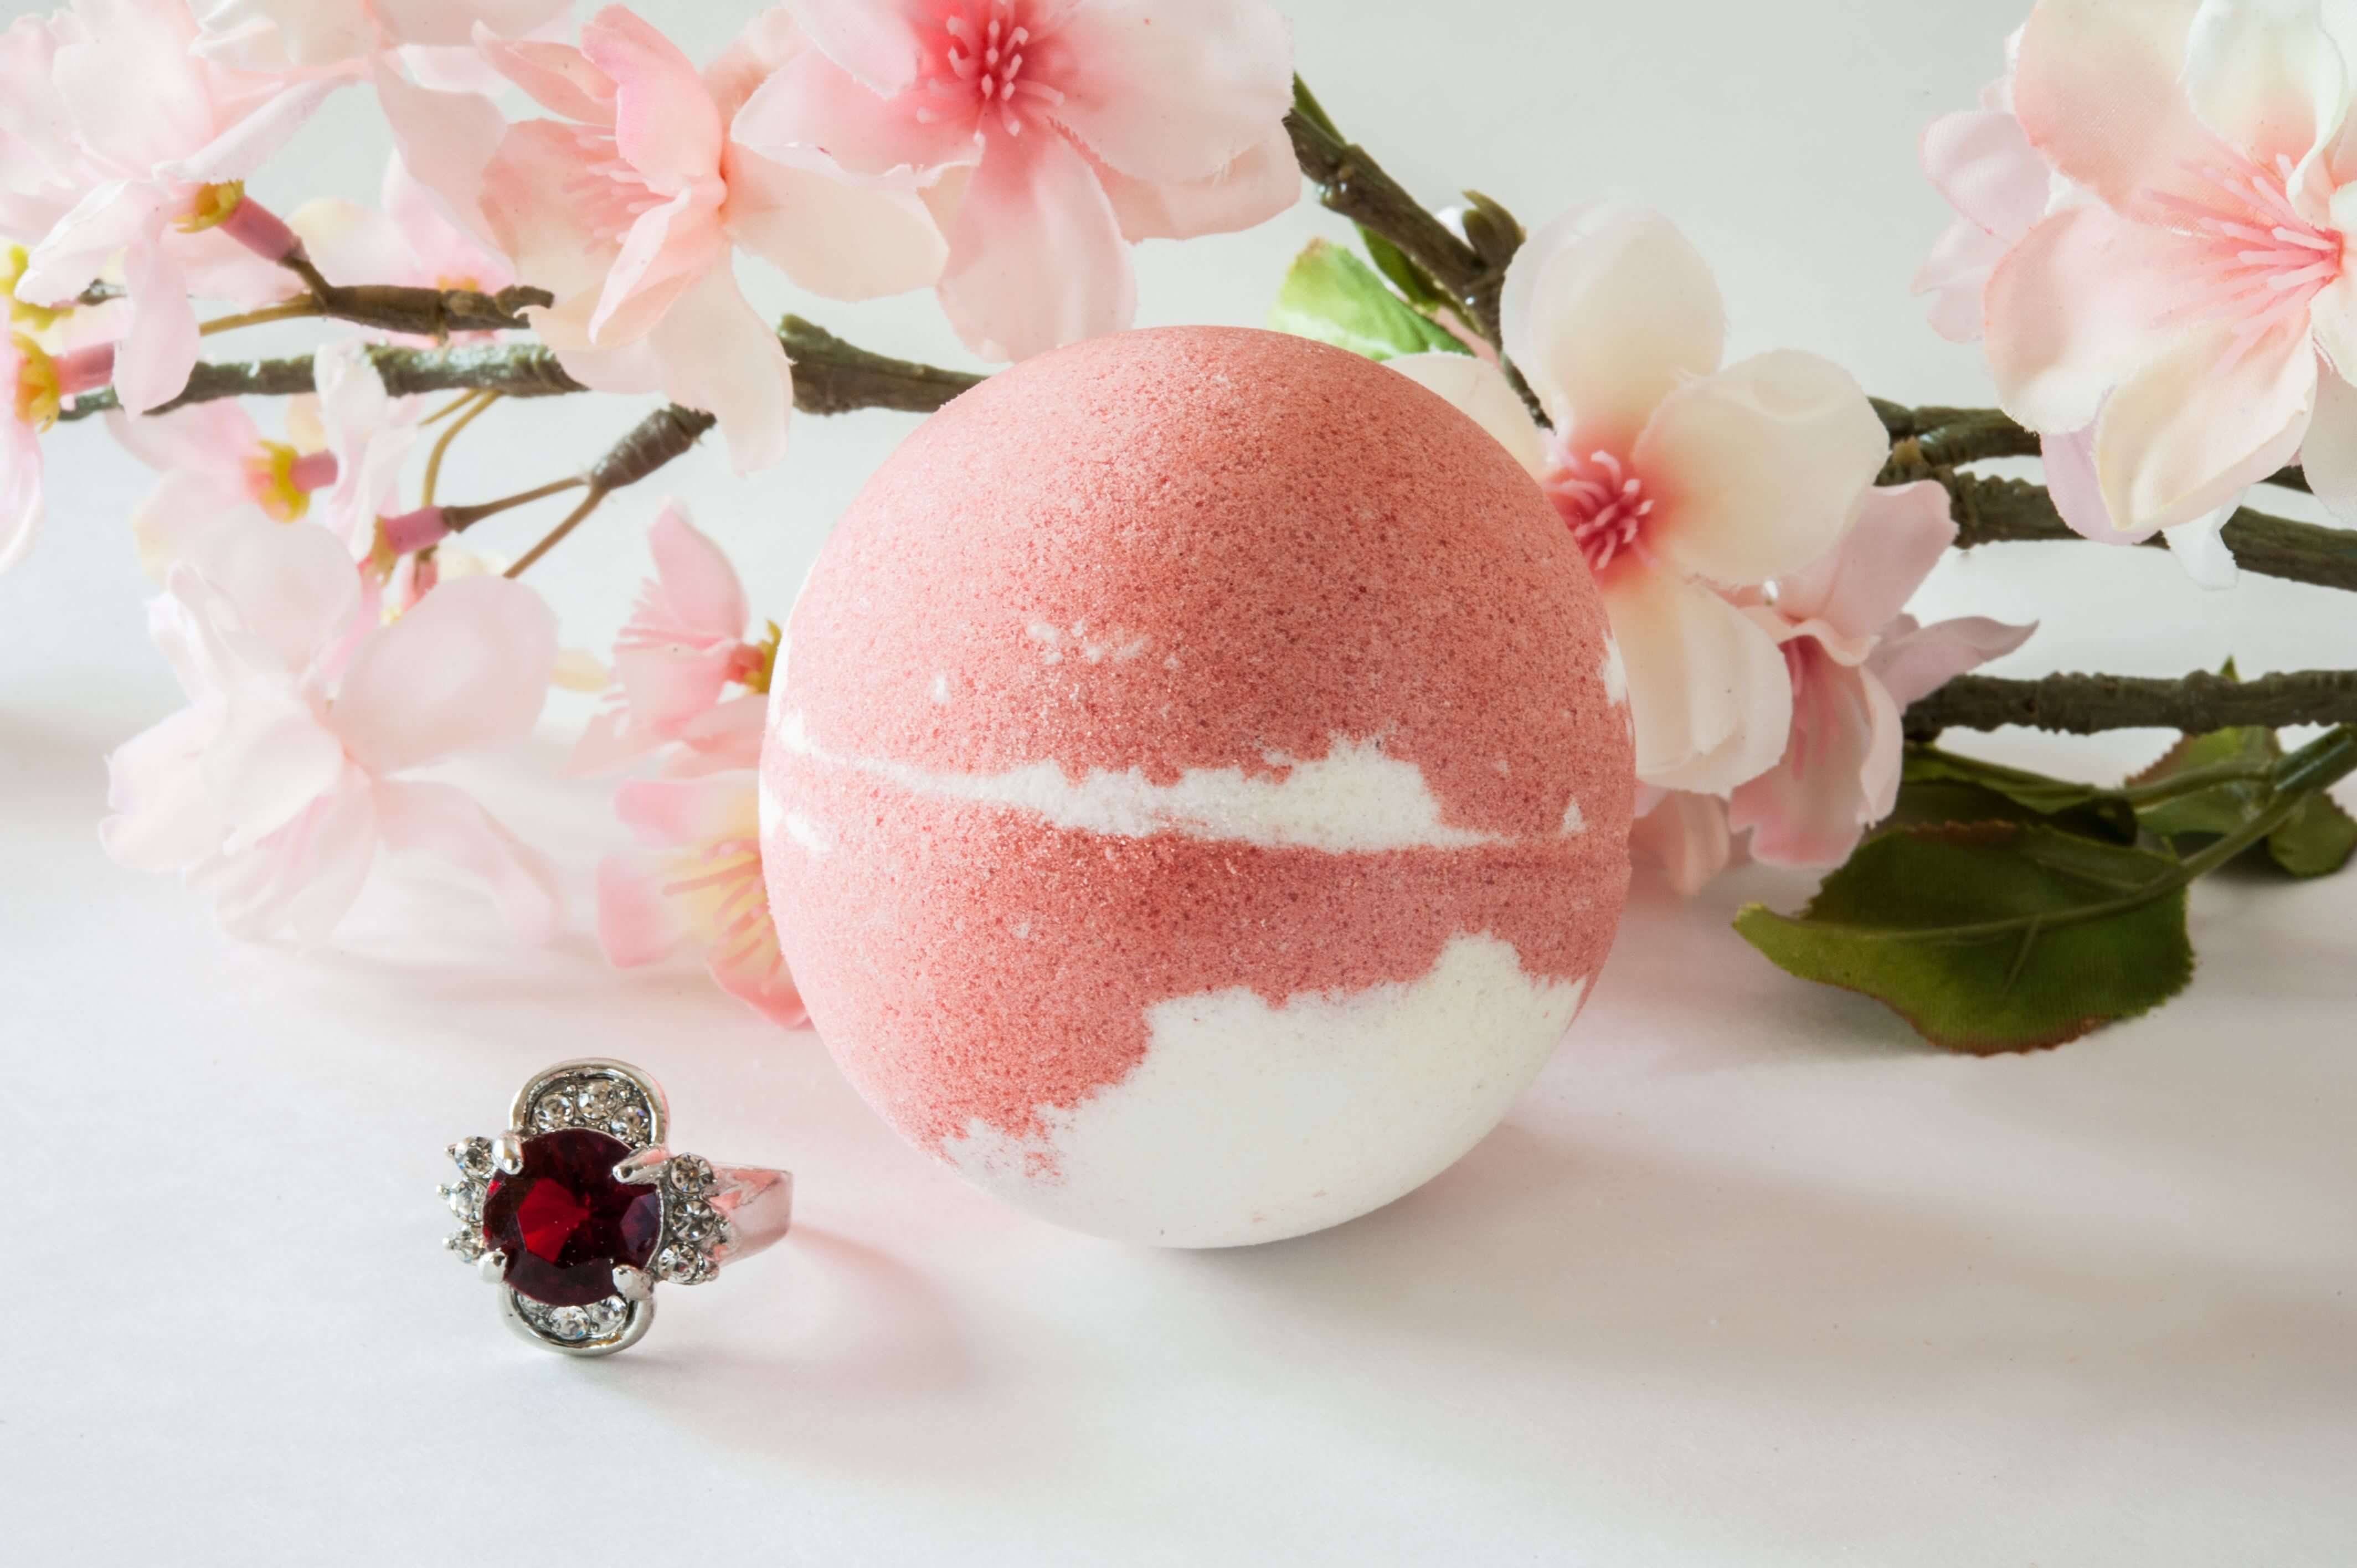 JAPANESE CHERRY BLOSSOM BATH BOMB – My Hidden Jewelry Bath Products